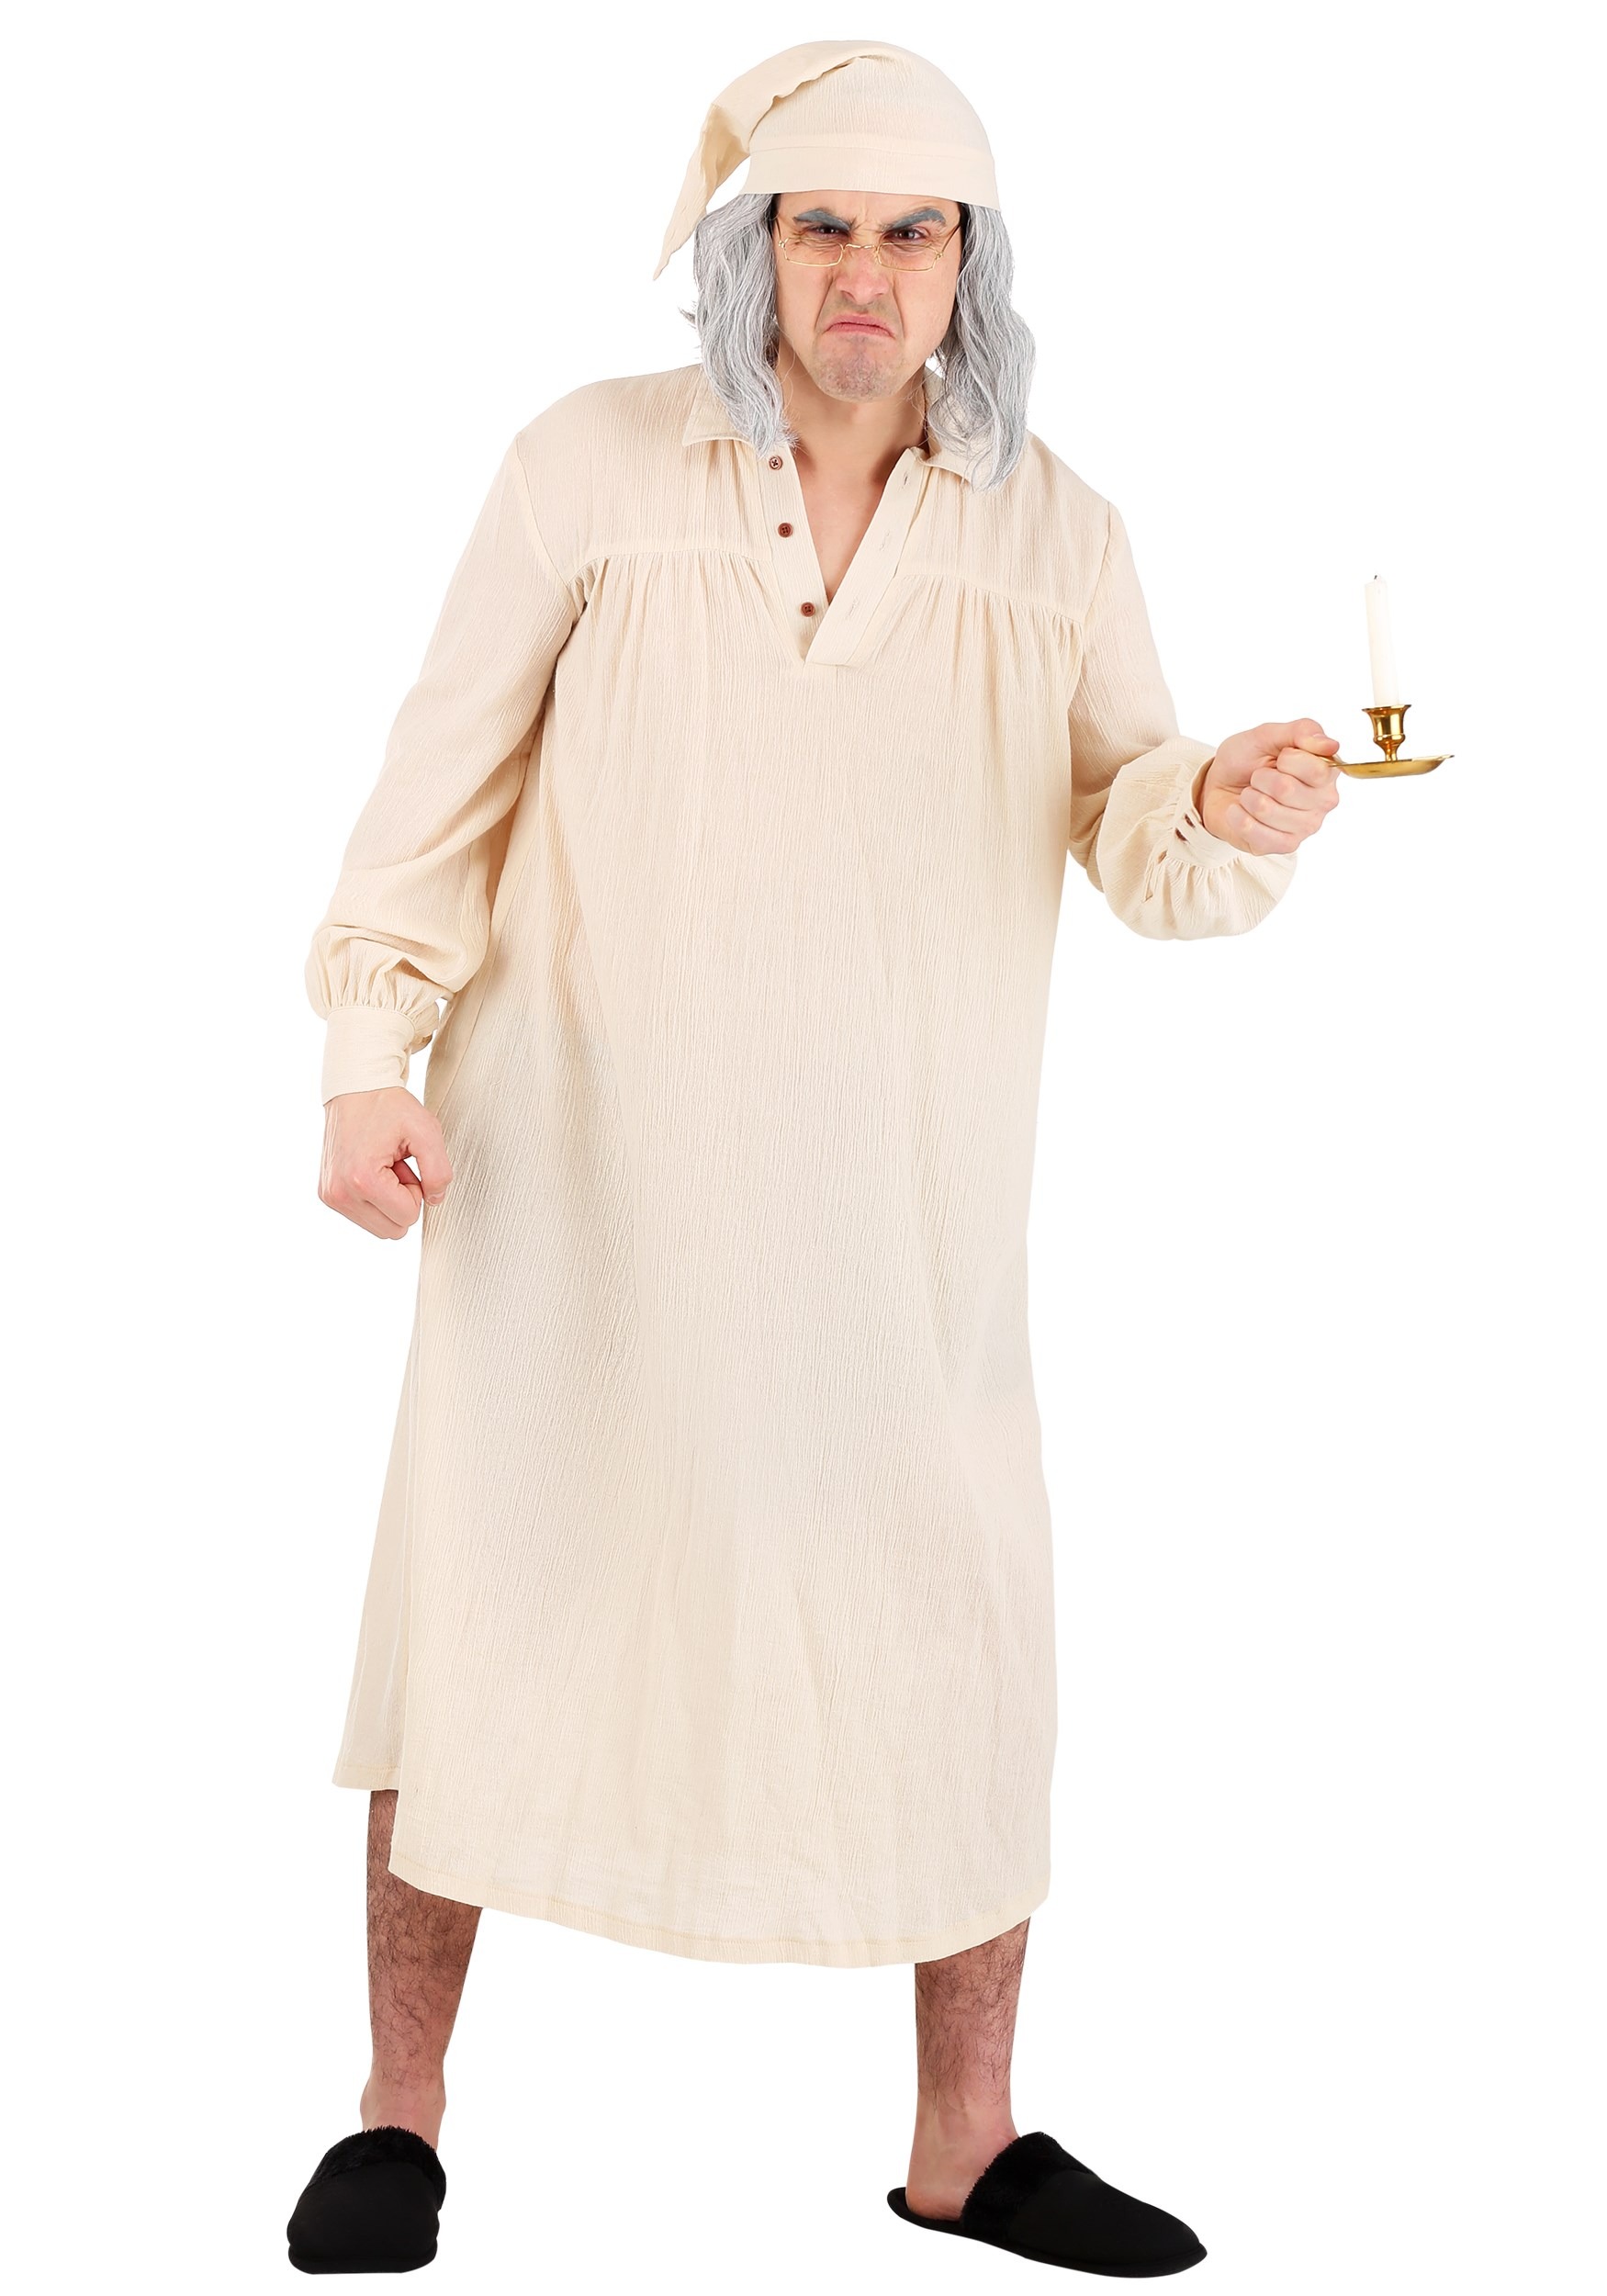 Men’s Humbug Nightgown Costume